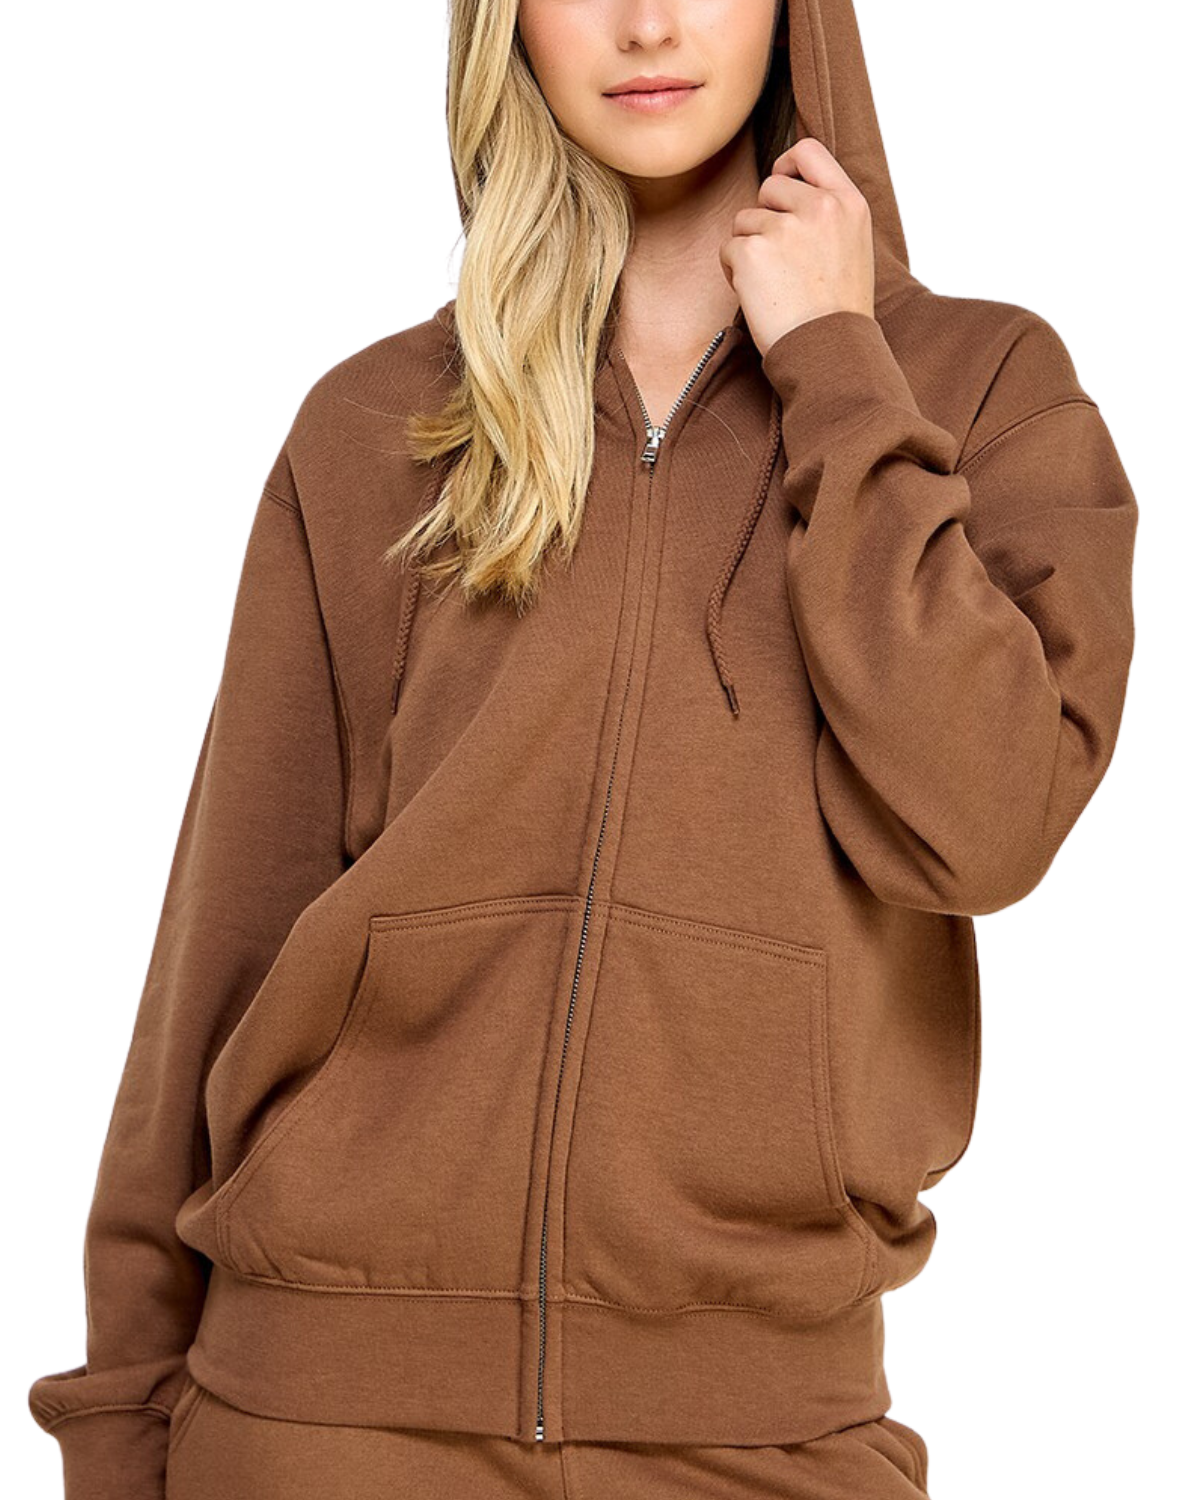 Model on a white backdrop wearing a women's oversized fleece zip up hooded sweater in a solid light brown.